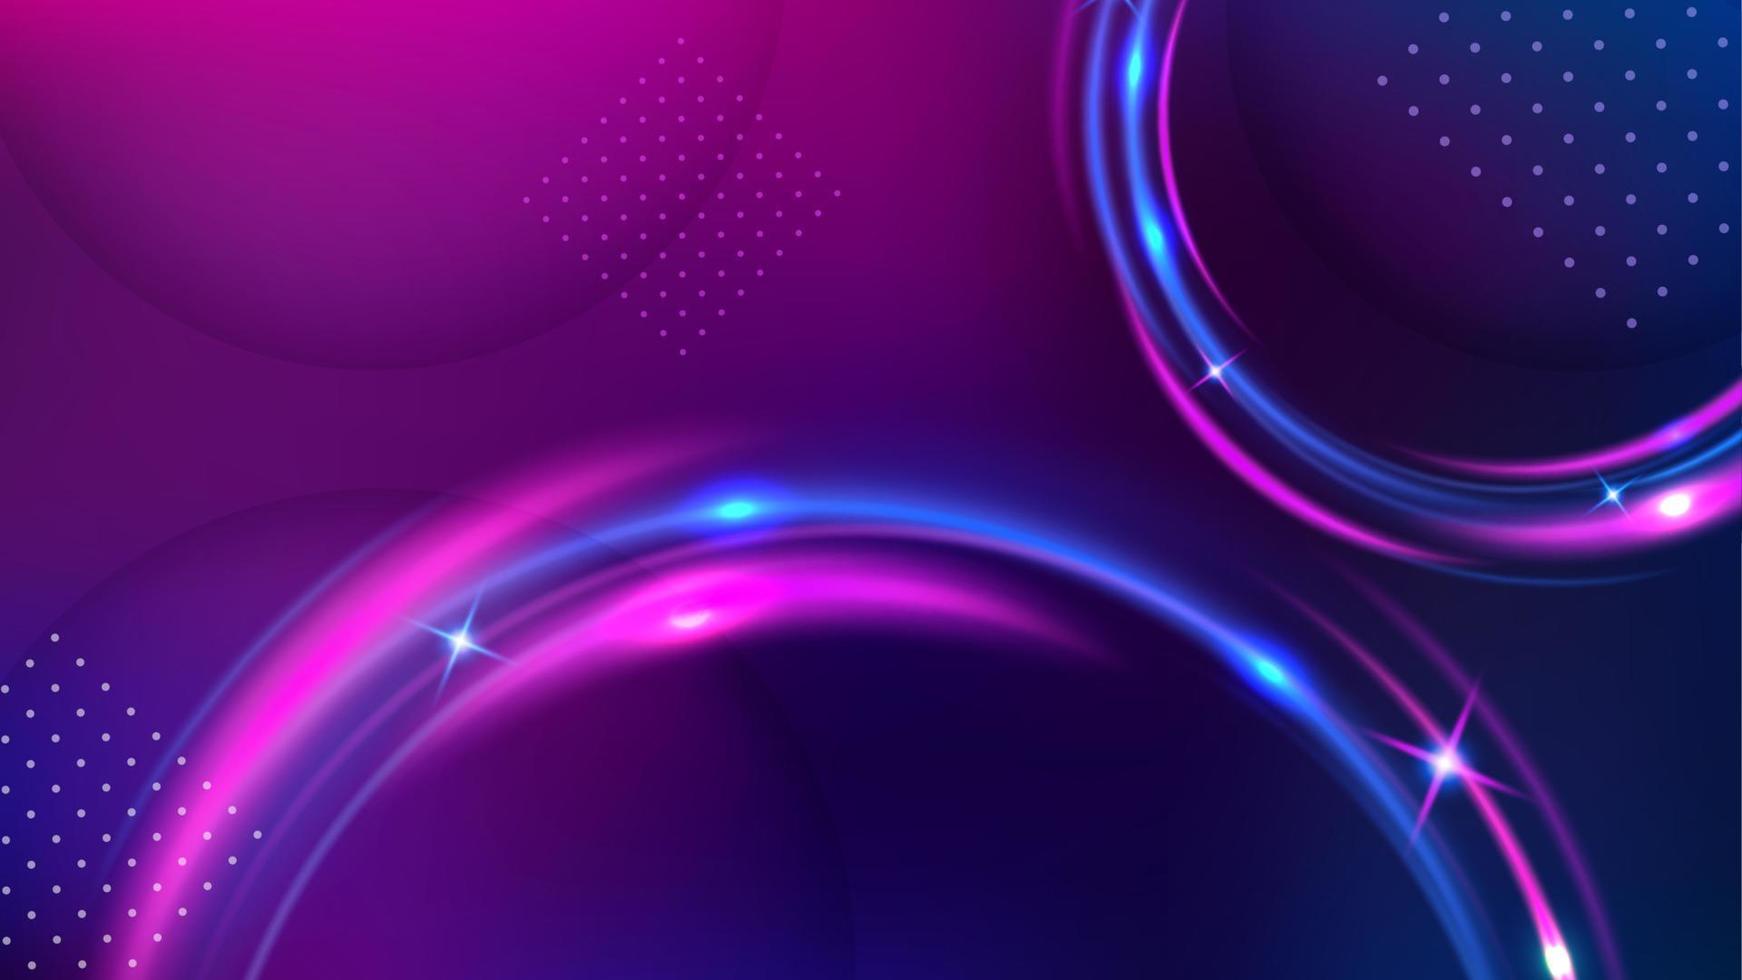 fondo de anillo claro, elegante luz violeta. ilustración vectorial de pantalla ancha vector